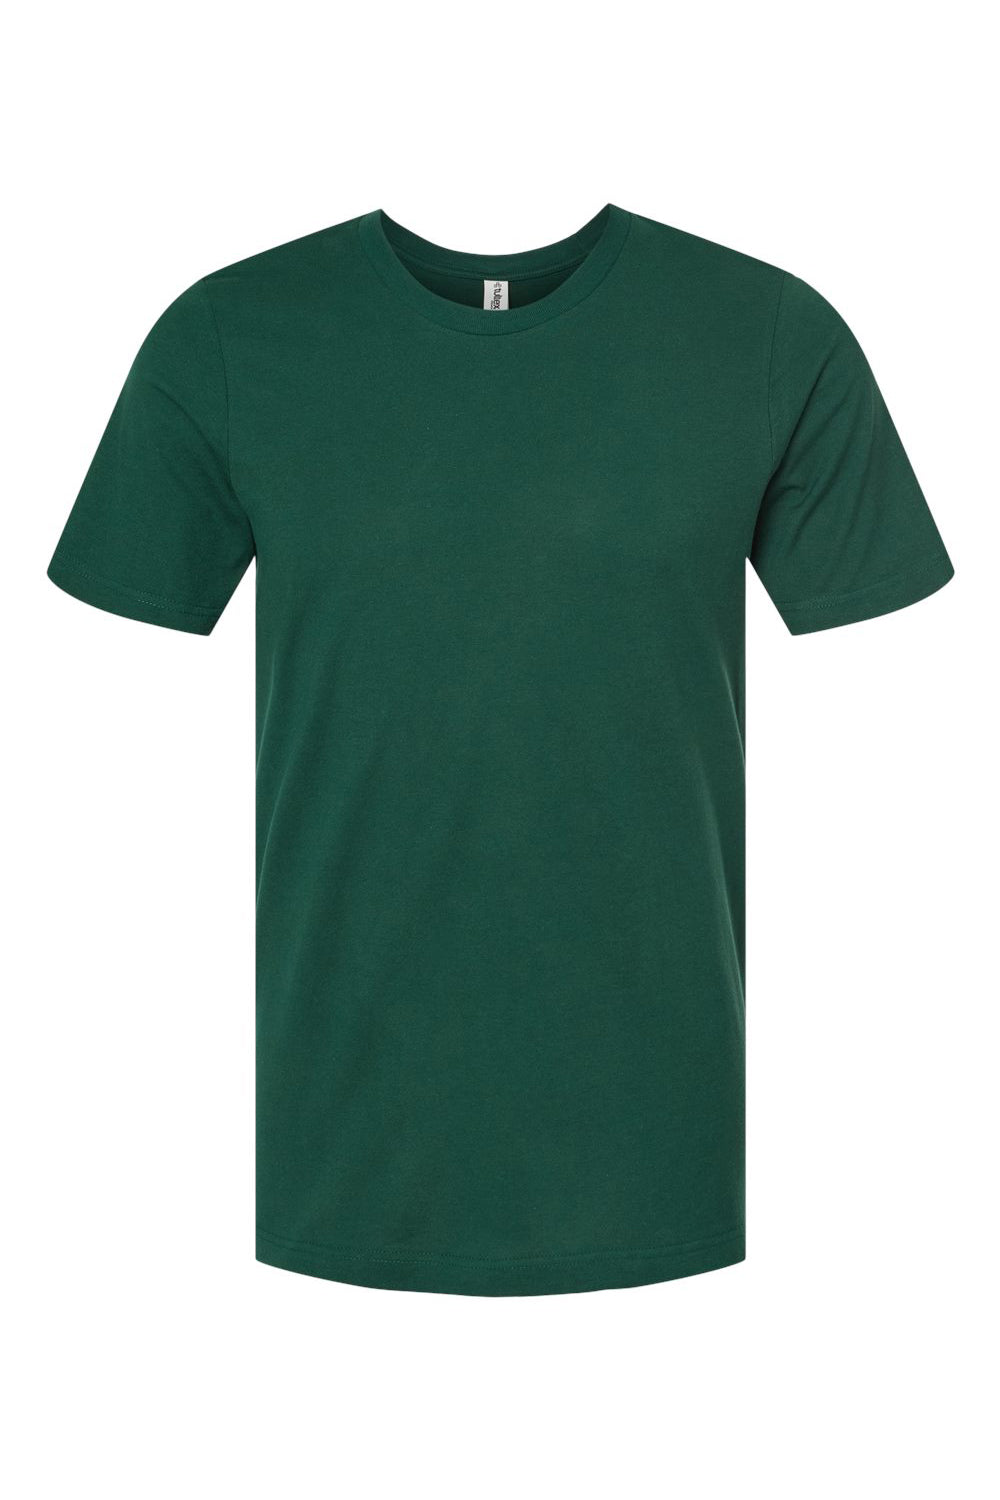 Tultex 602 Mens Short Sleeve Crewneck T-Shirt Forest Green Flat Front